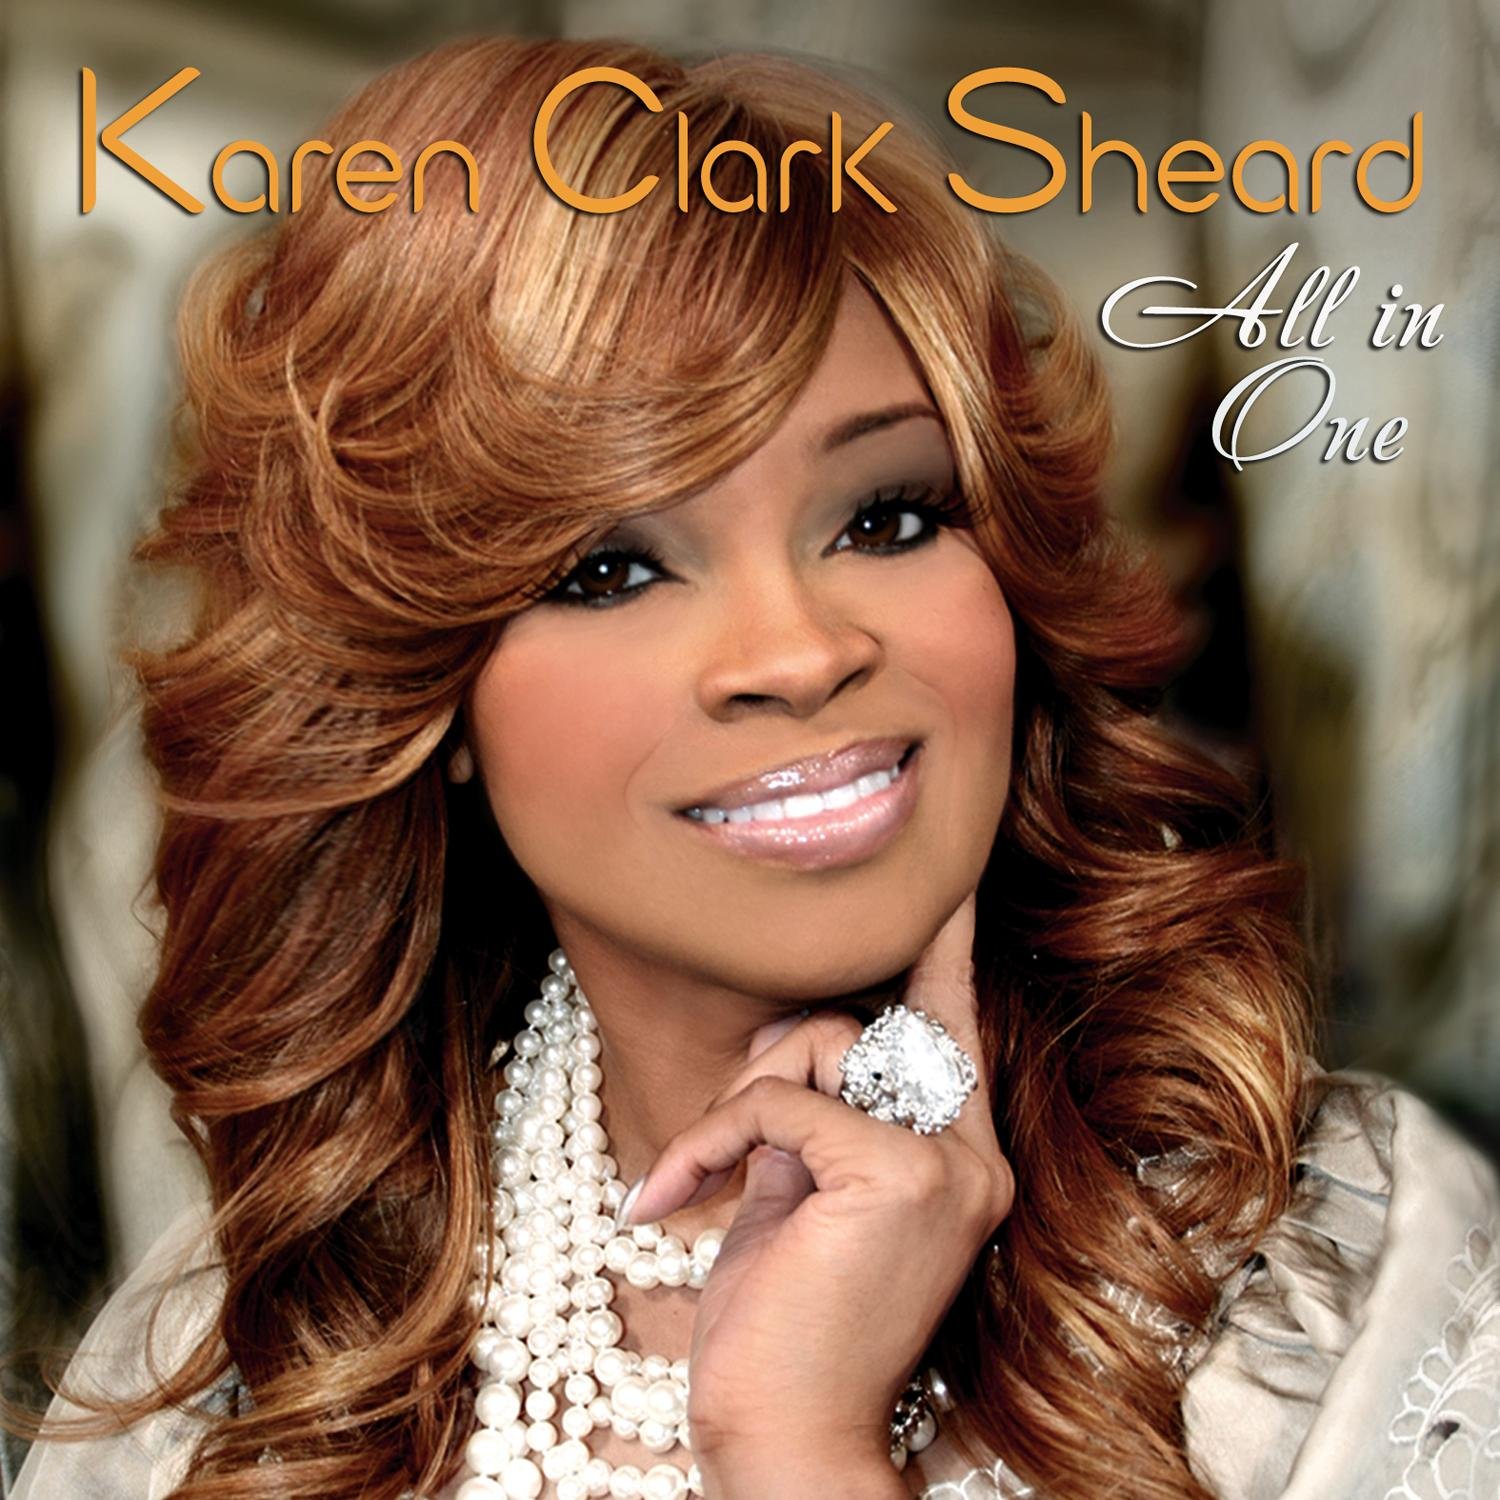 All In One CD - Karen Clark Sheard